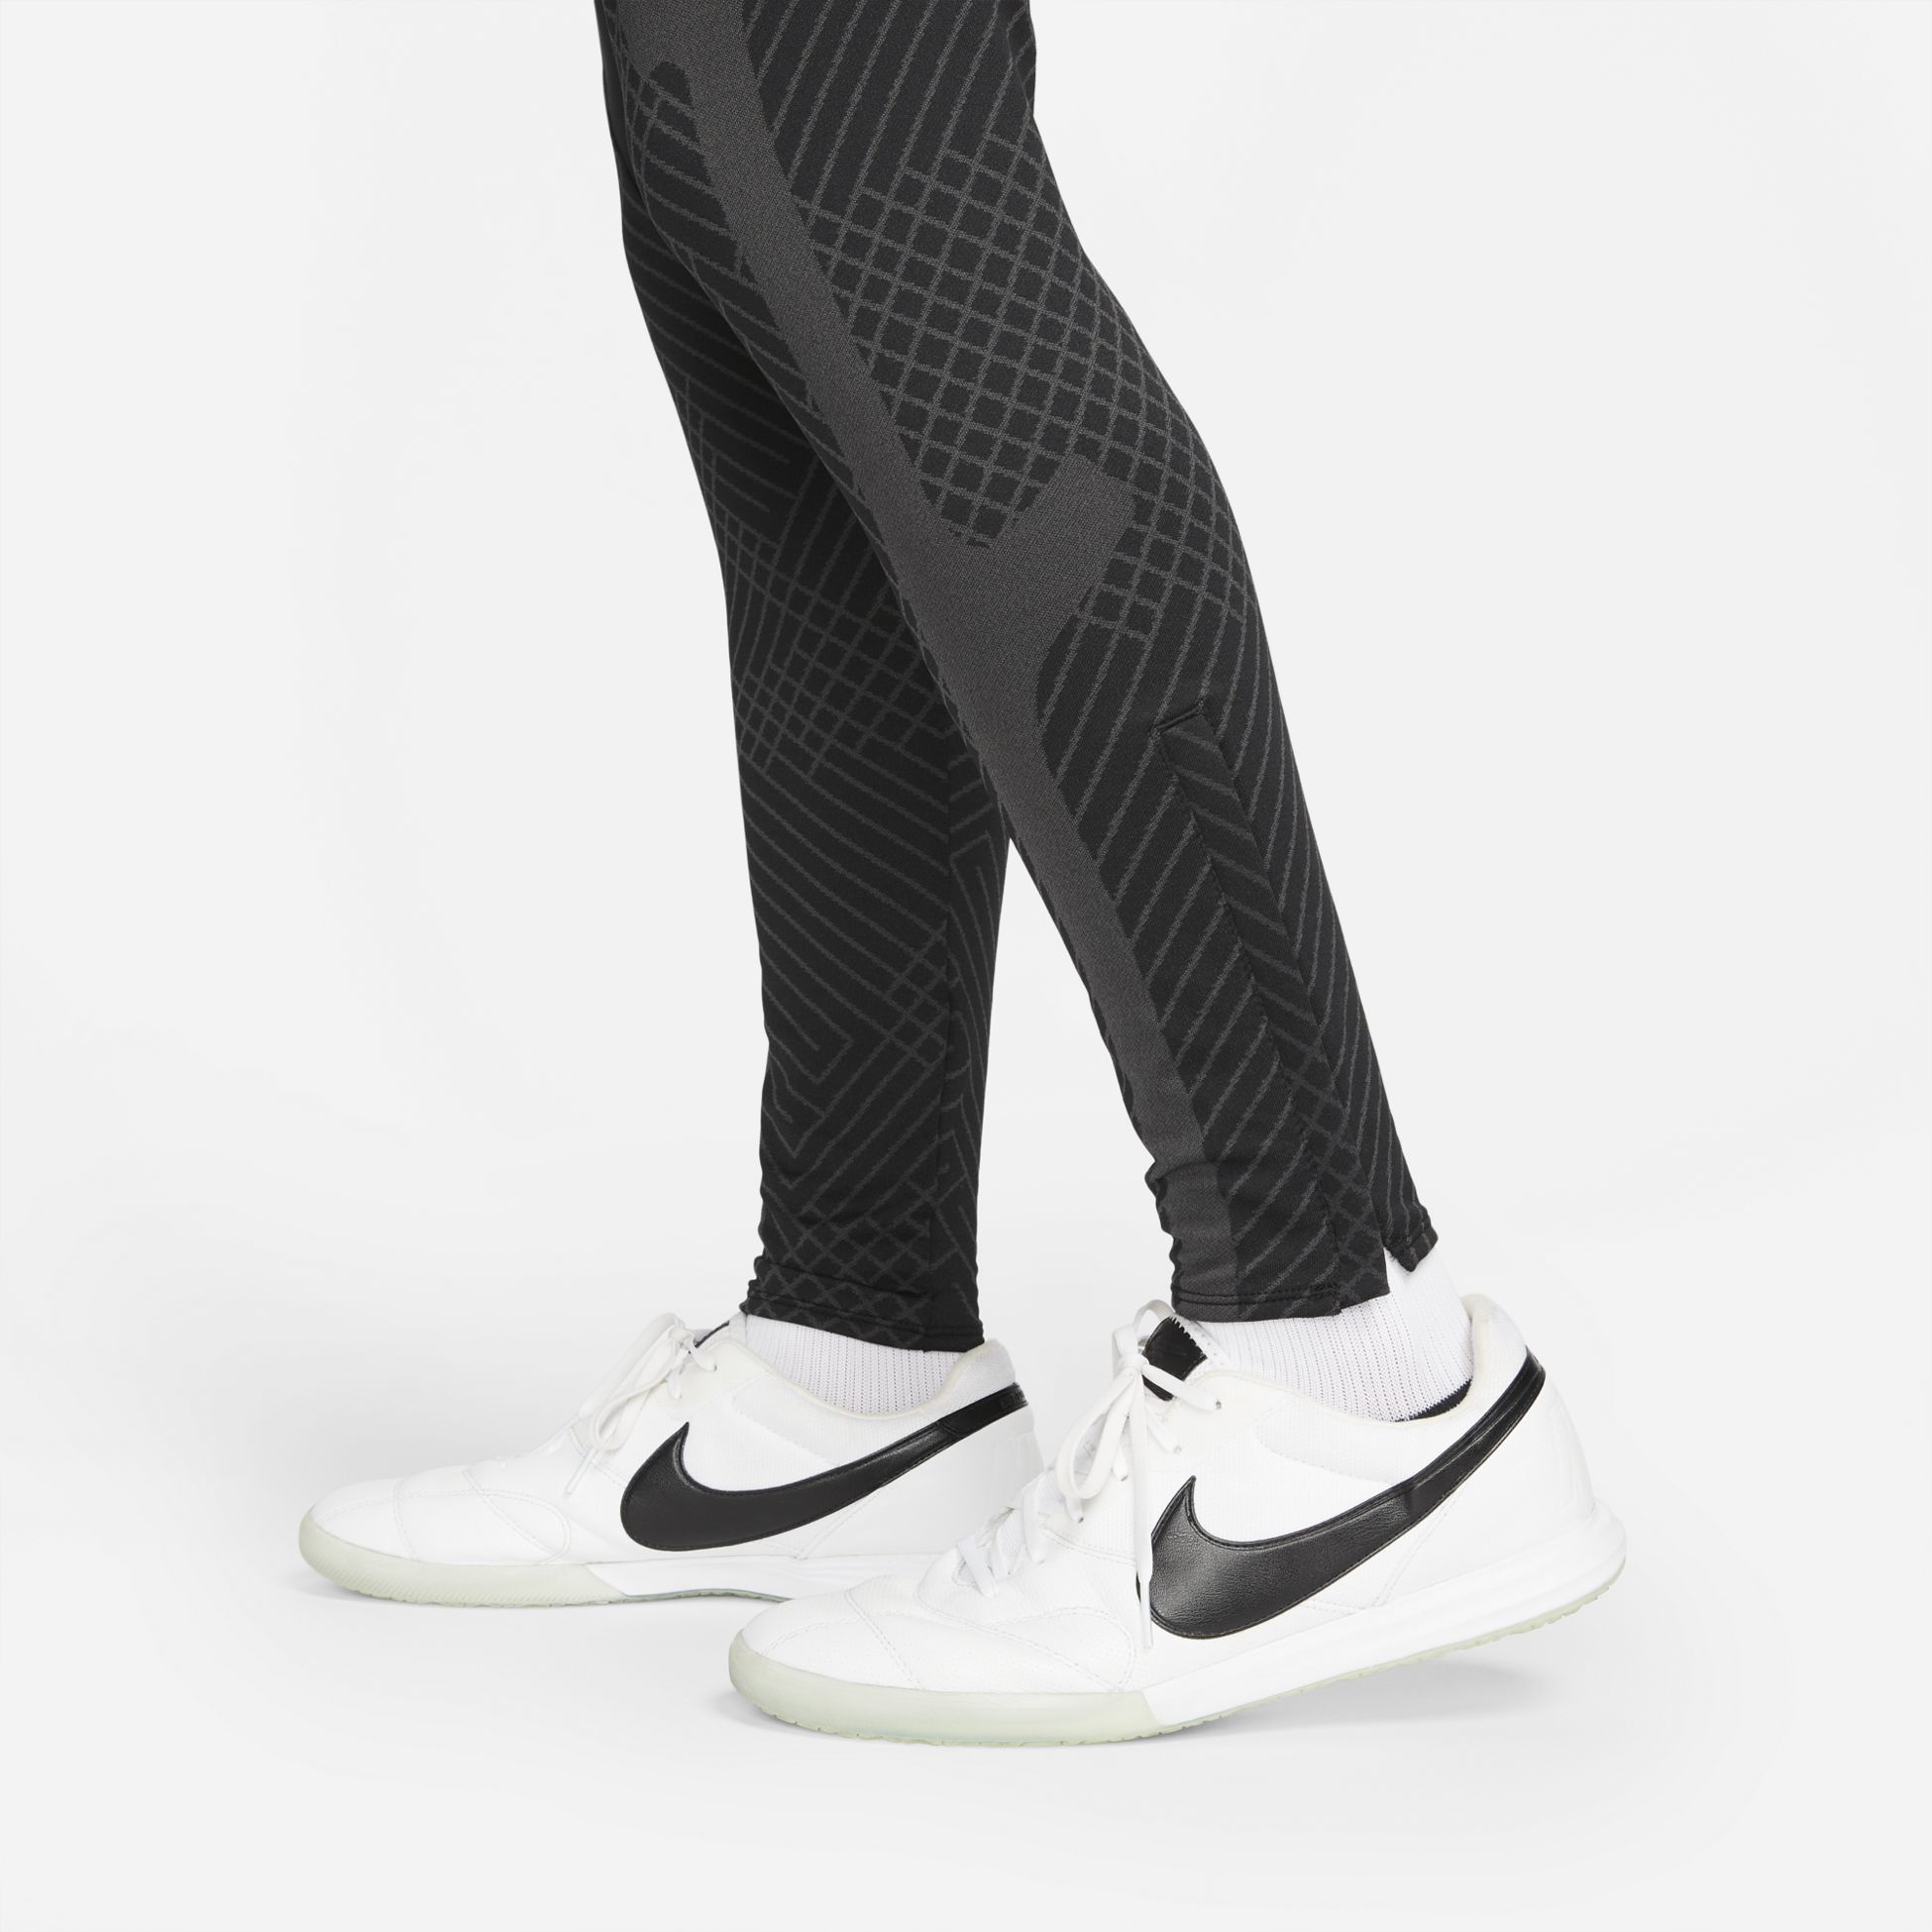 NIKE, Nike Dri-FIT Strike Men's Soccer Pants